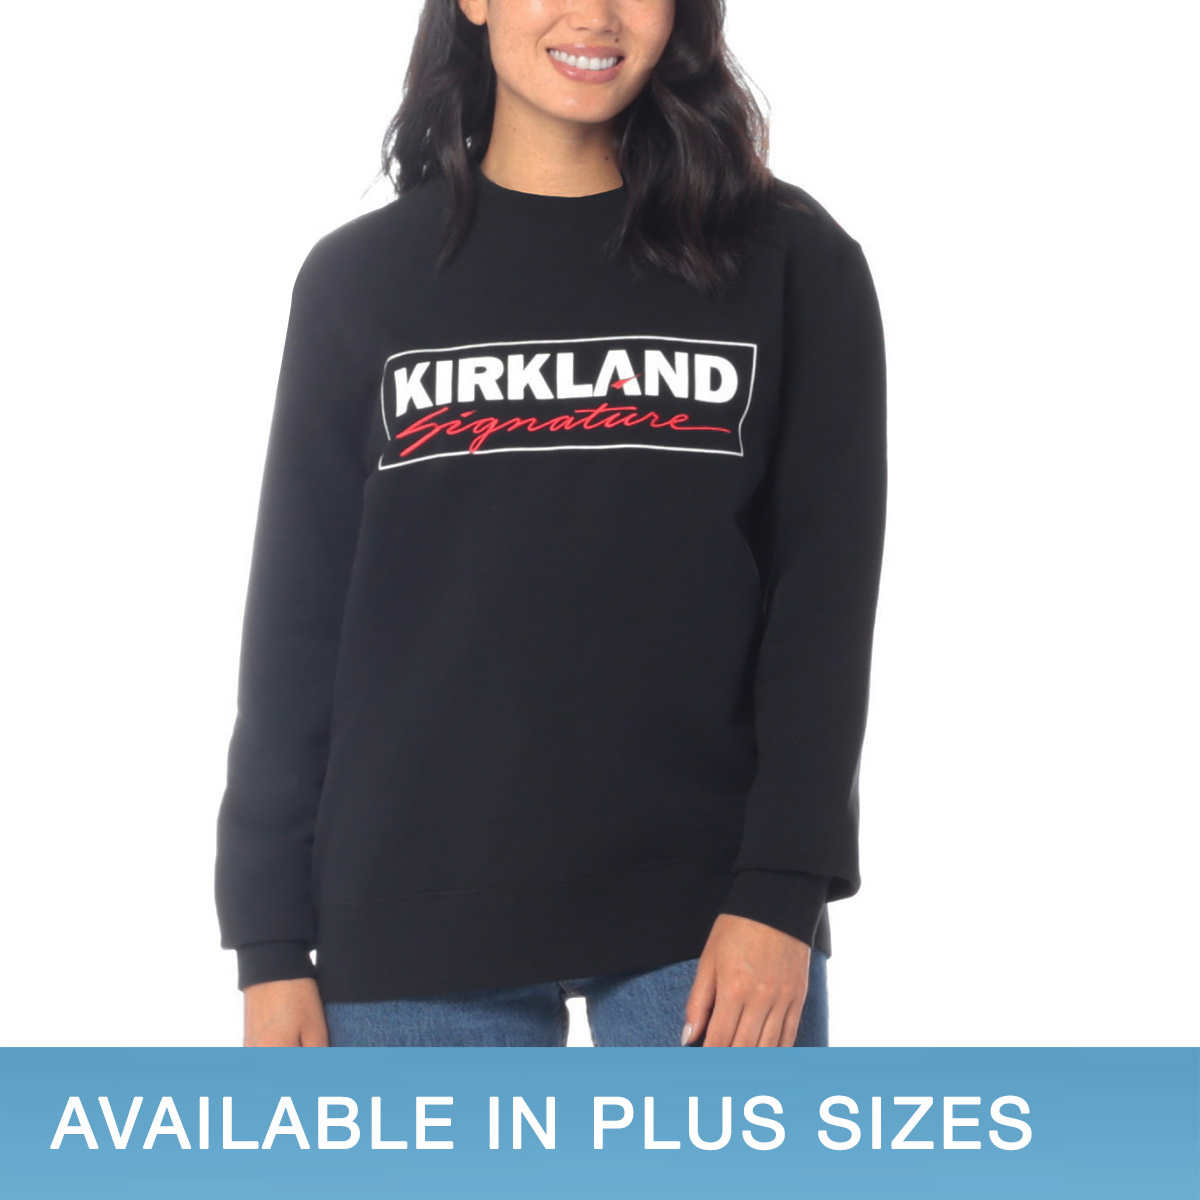 Kirkland Signature Unisex Logo Sweatshirt $19.99 with F/S @ Costco